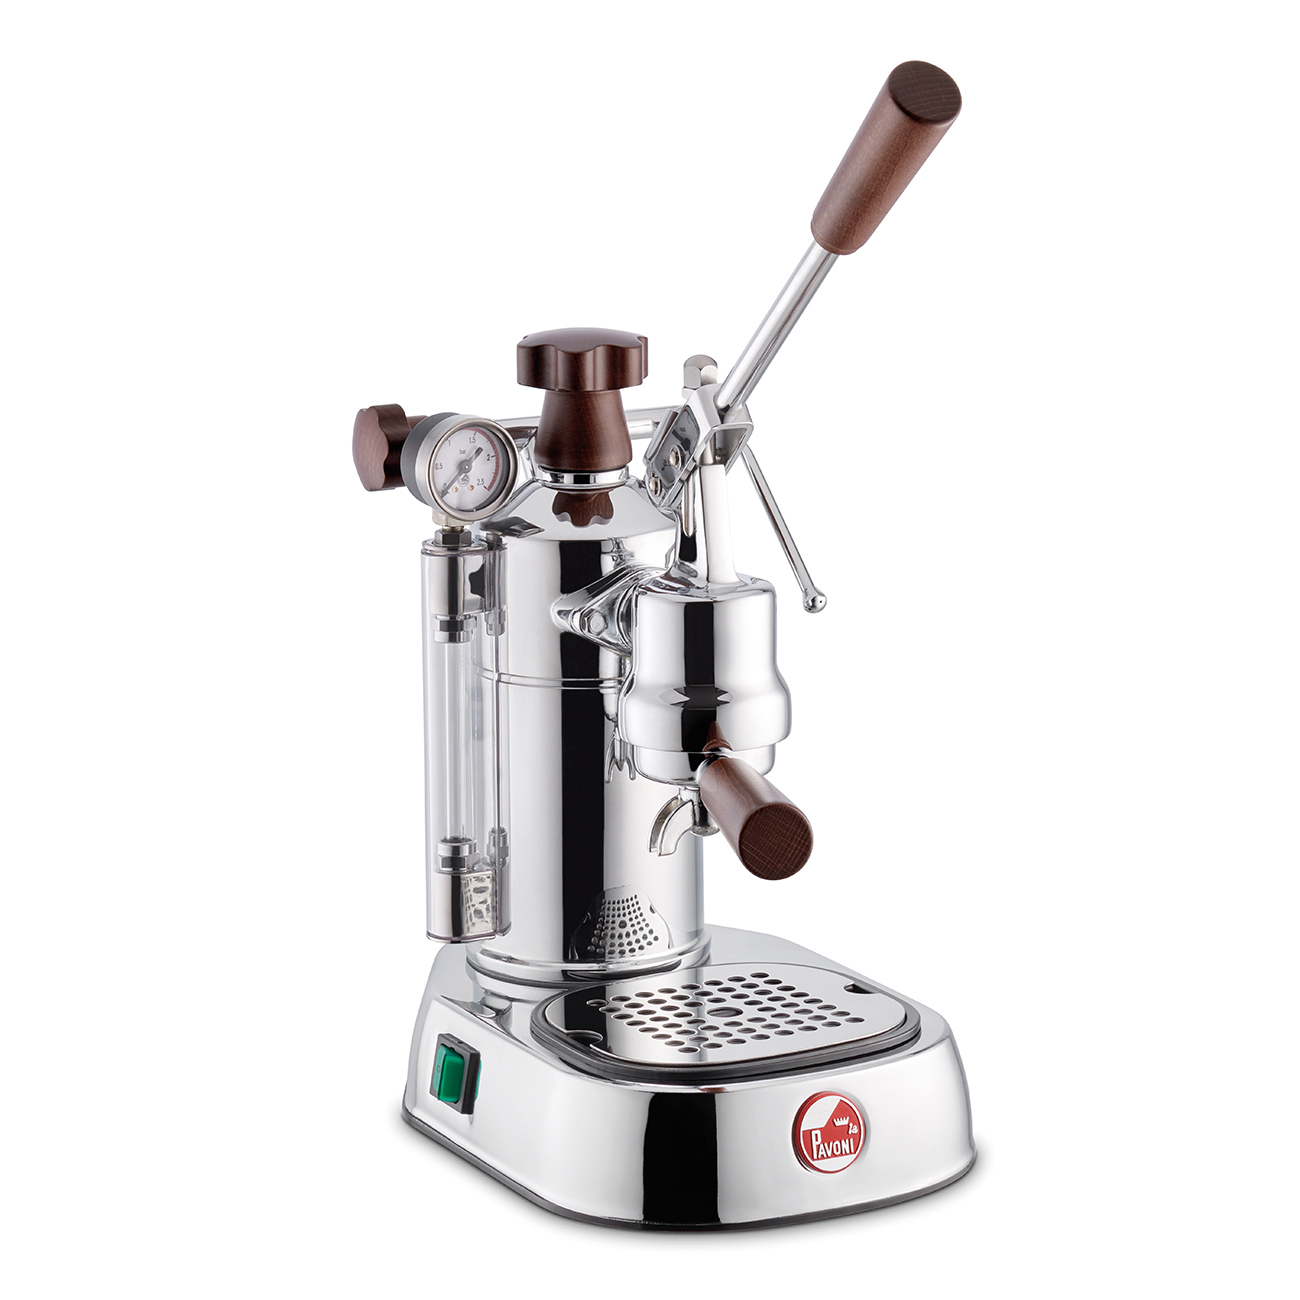 La Pavoni Professional Lusso -espressokeitin puukahvoilla varustettuna